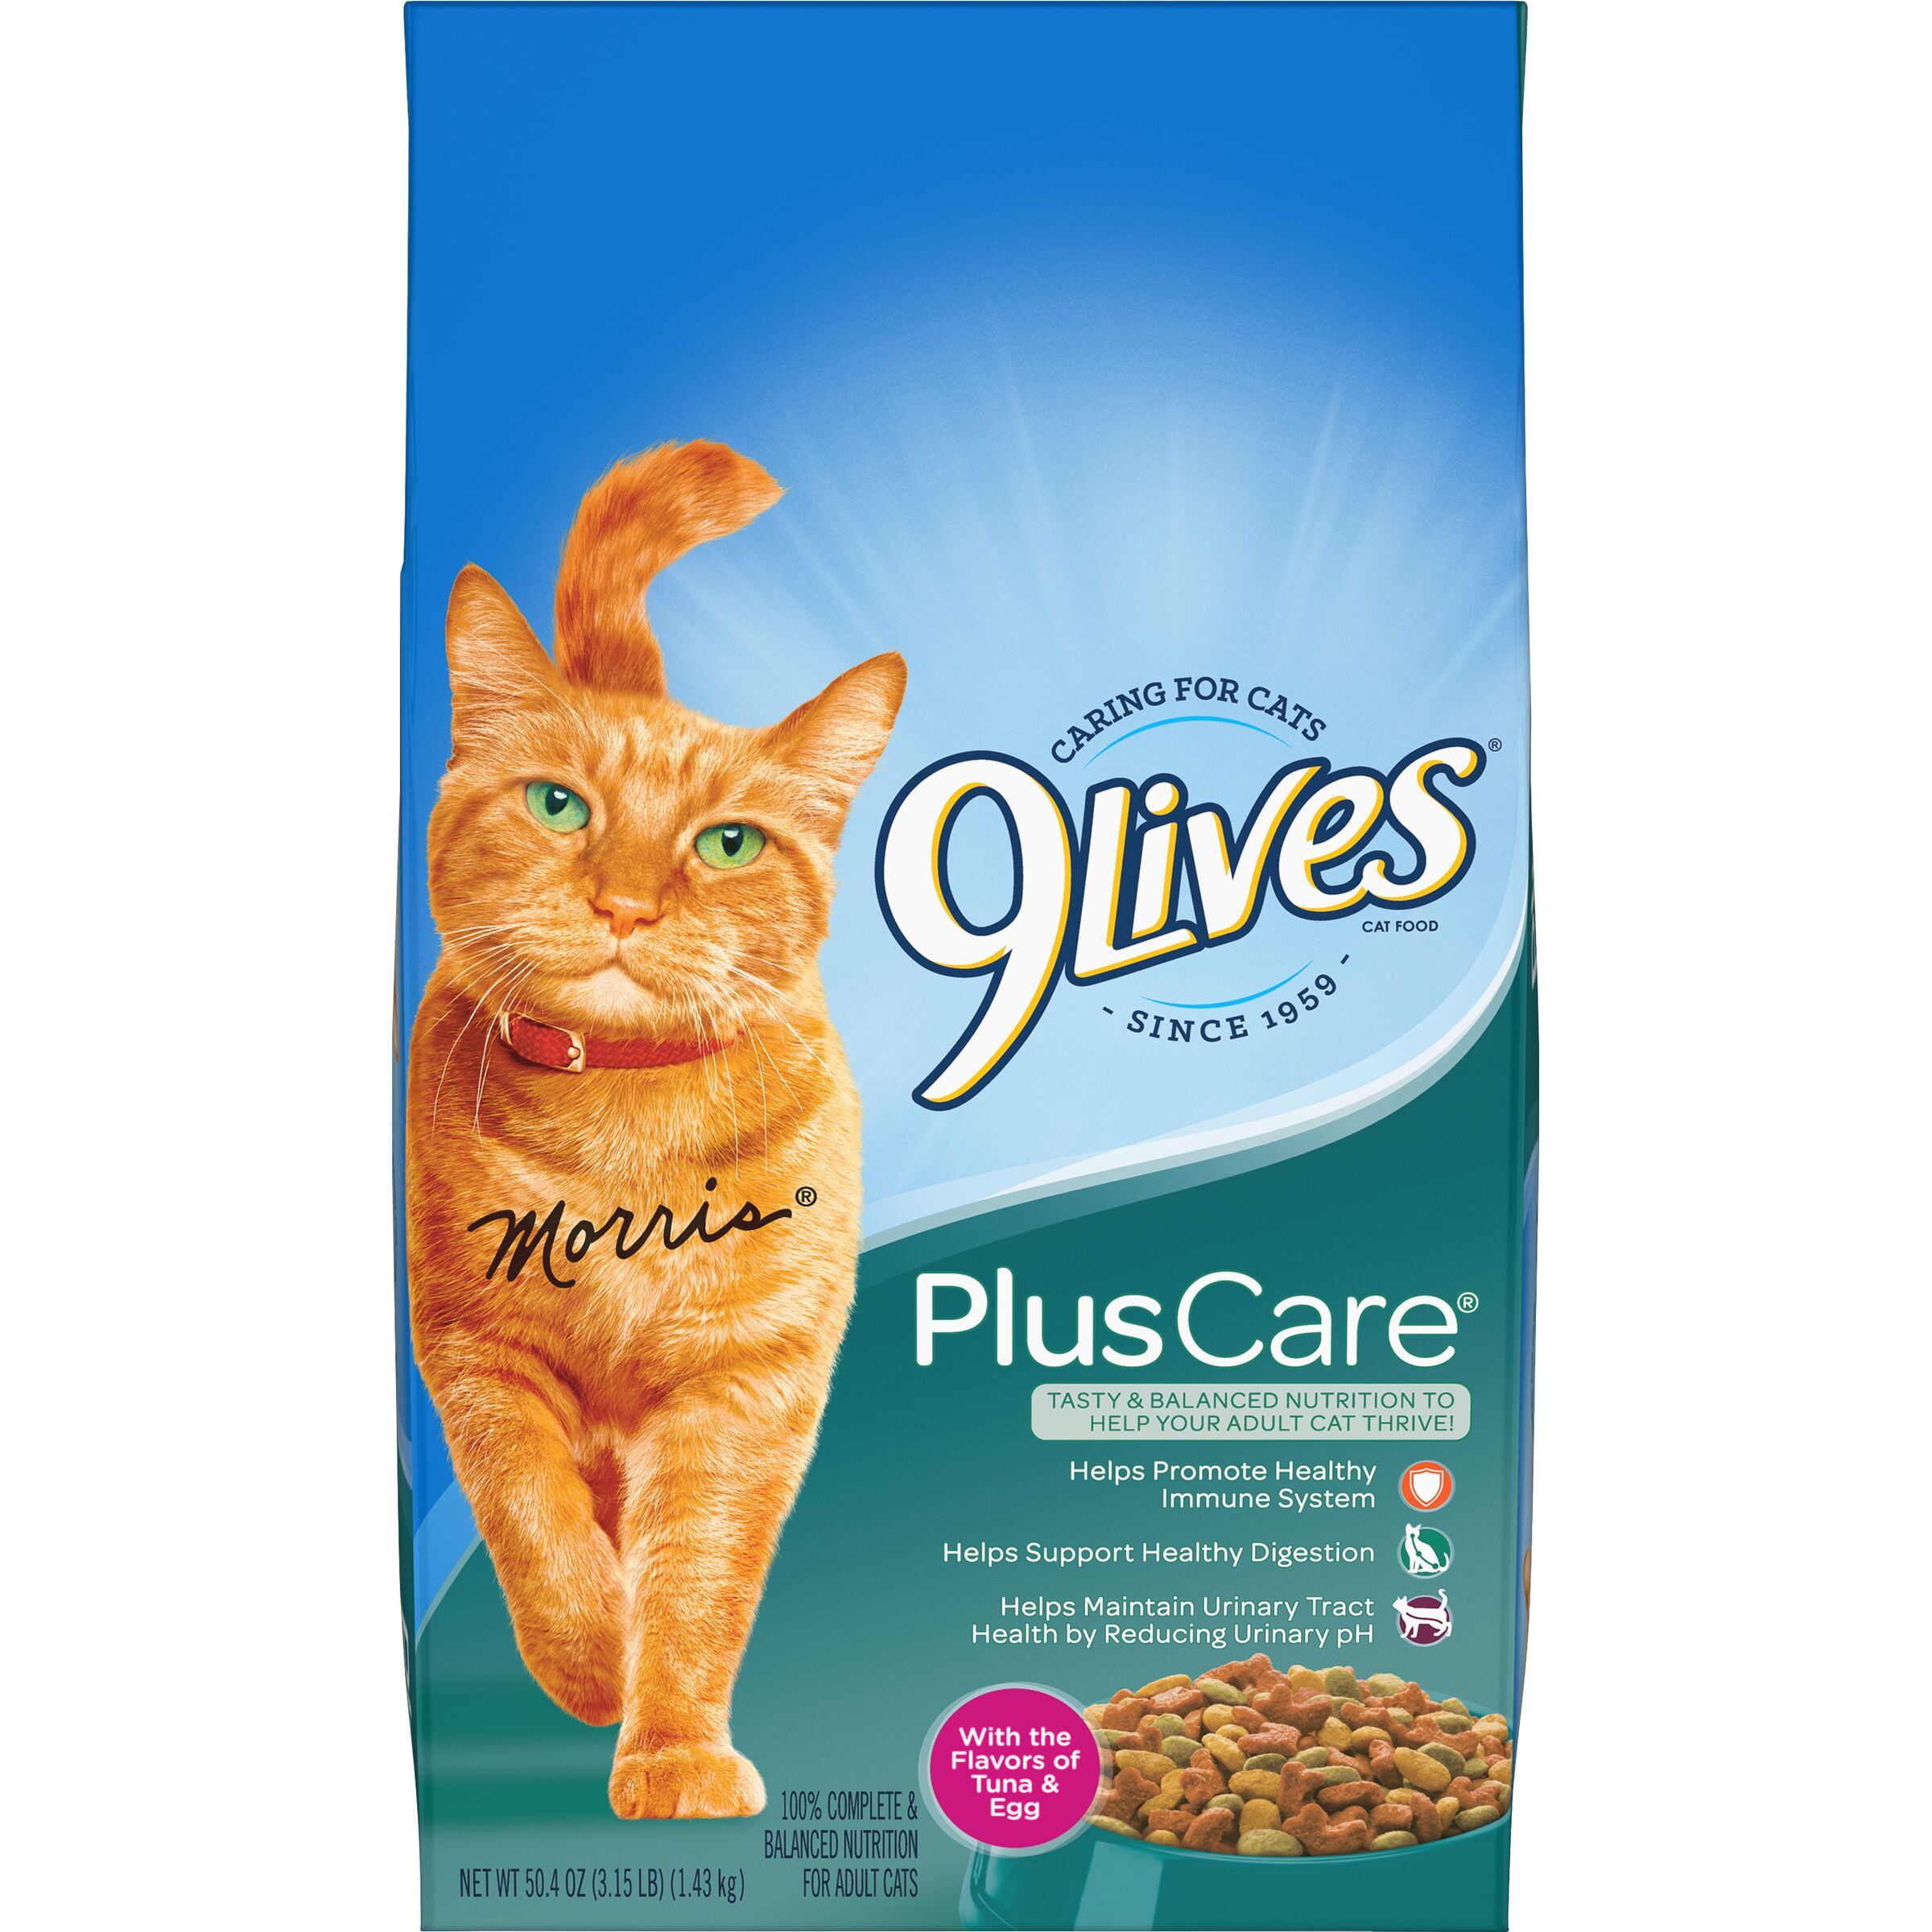 9Lives Plus Care Dry Cat Food, 3.15Pound Bag